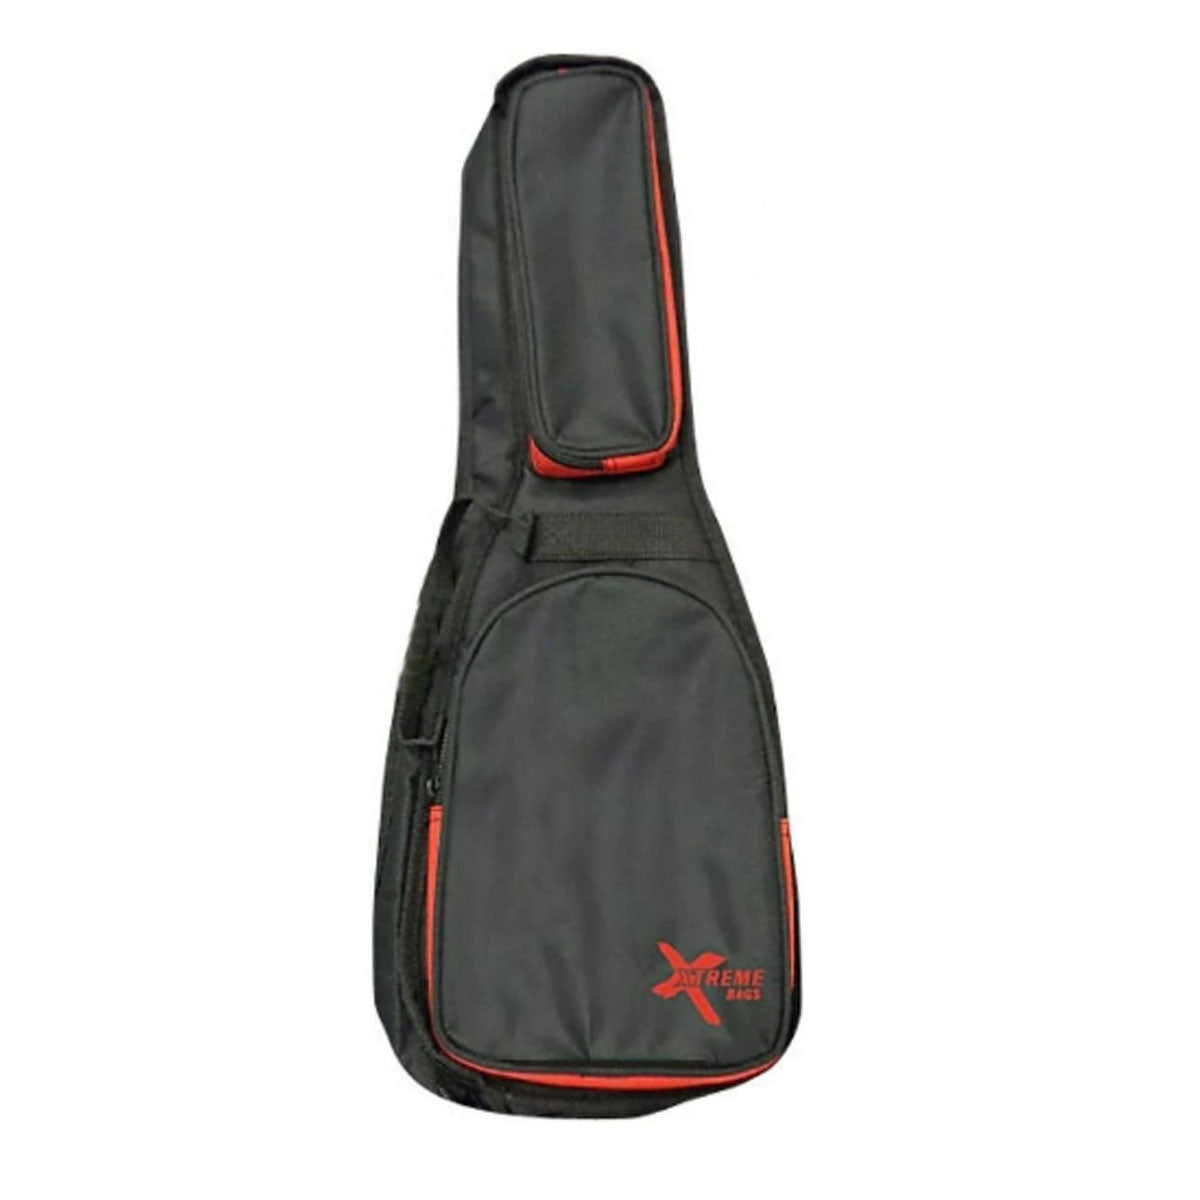 Xtreme OB502 Concert Deluxe Series Ukulele Black Bag